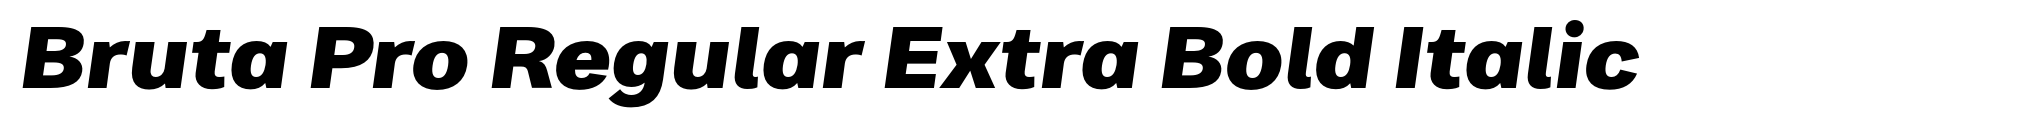 Bruta Pro Regular Extra Bold Italic image